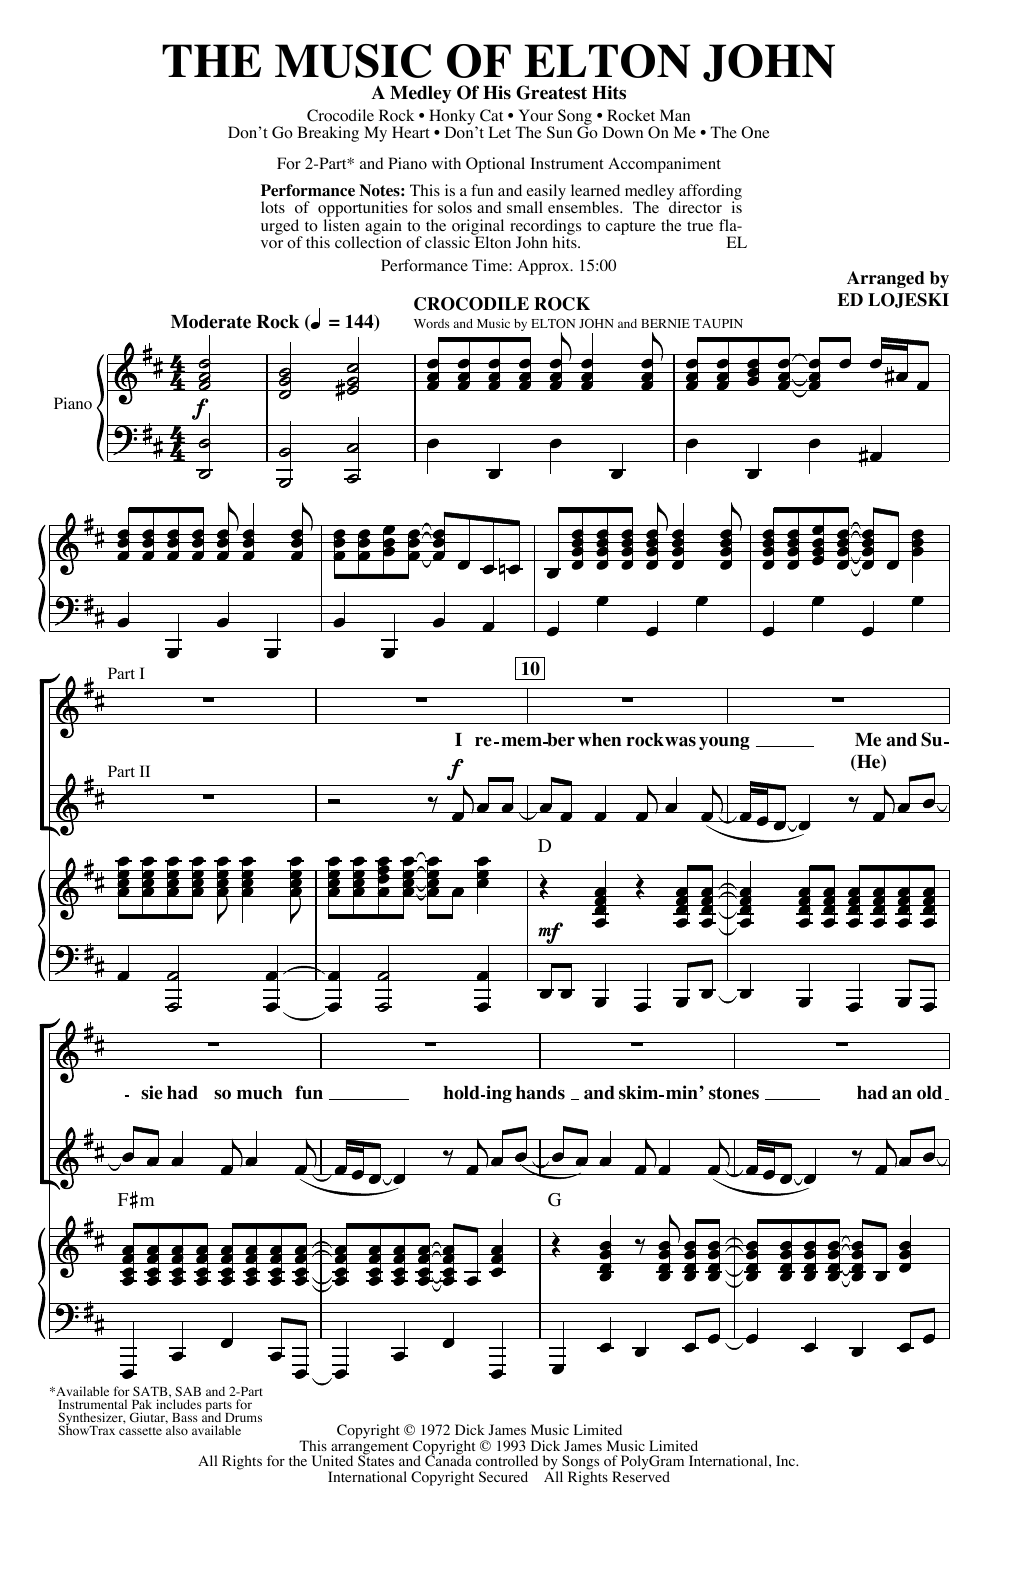 Elton John The Music of Elton John (A Medley Of His Greatest Hits) (arr. Ed Lojeski) Sheet Music Notes & Chords for 2-Part Choir - Download or Print PDF